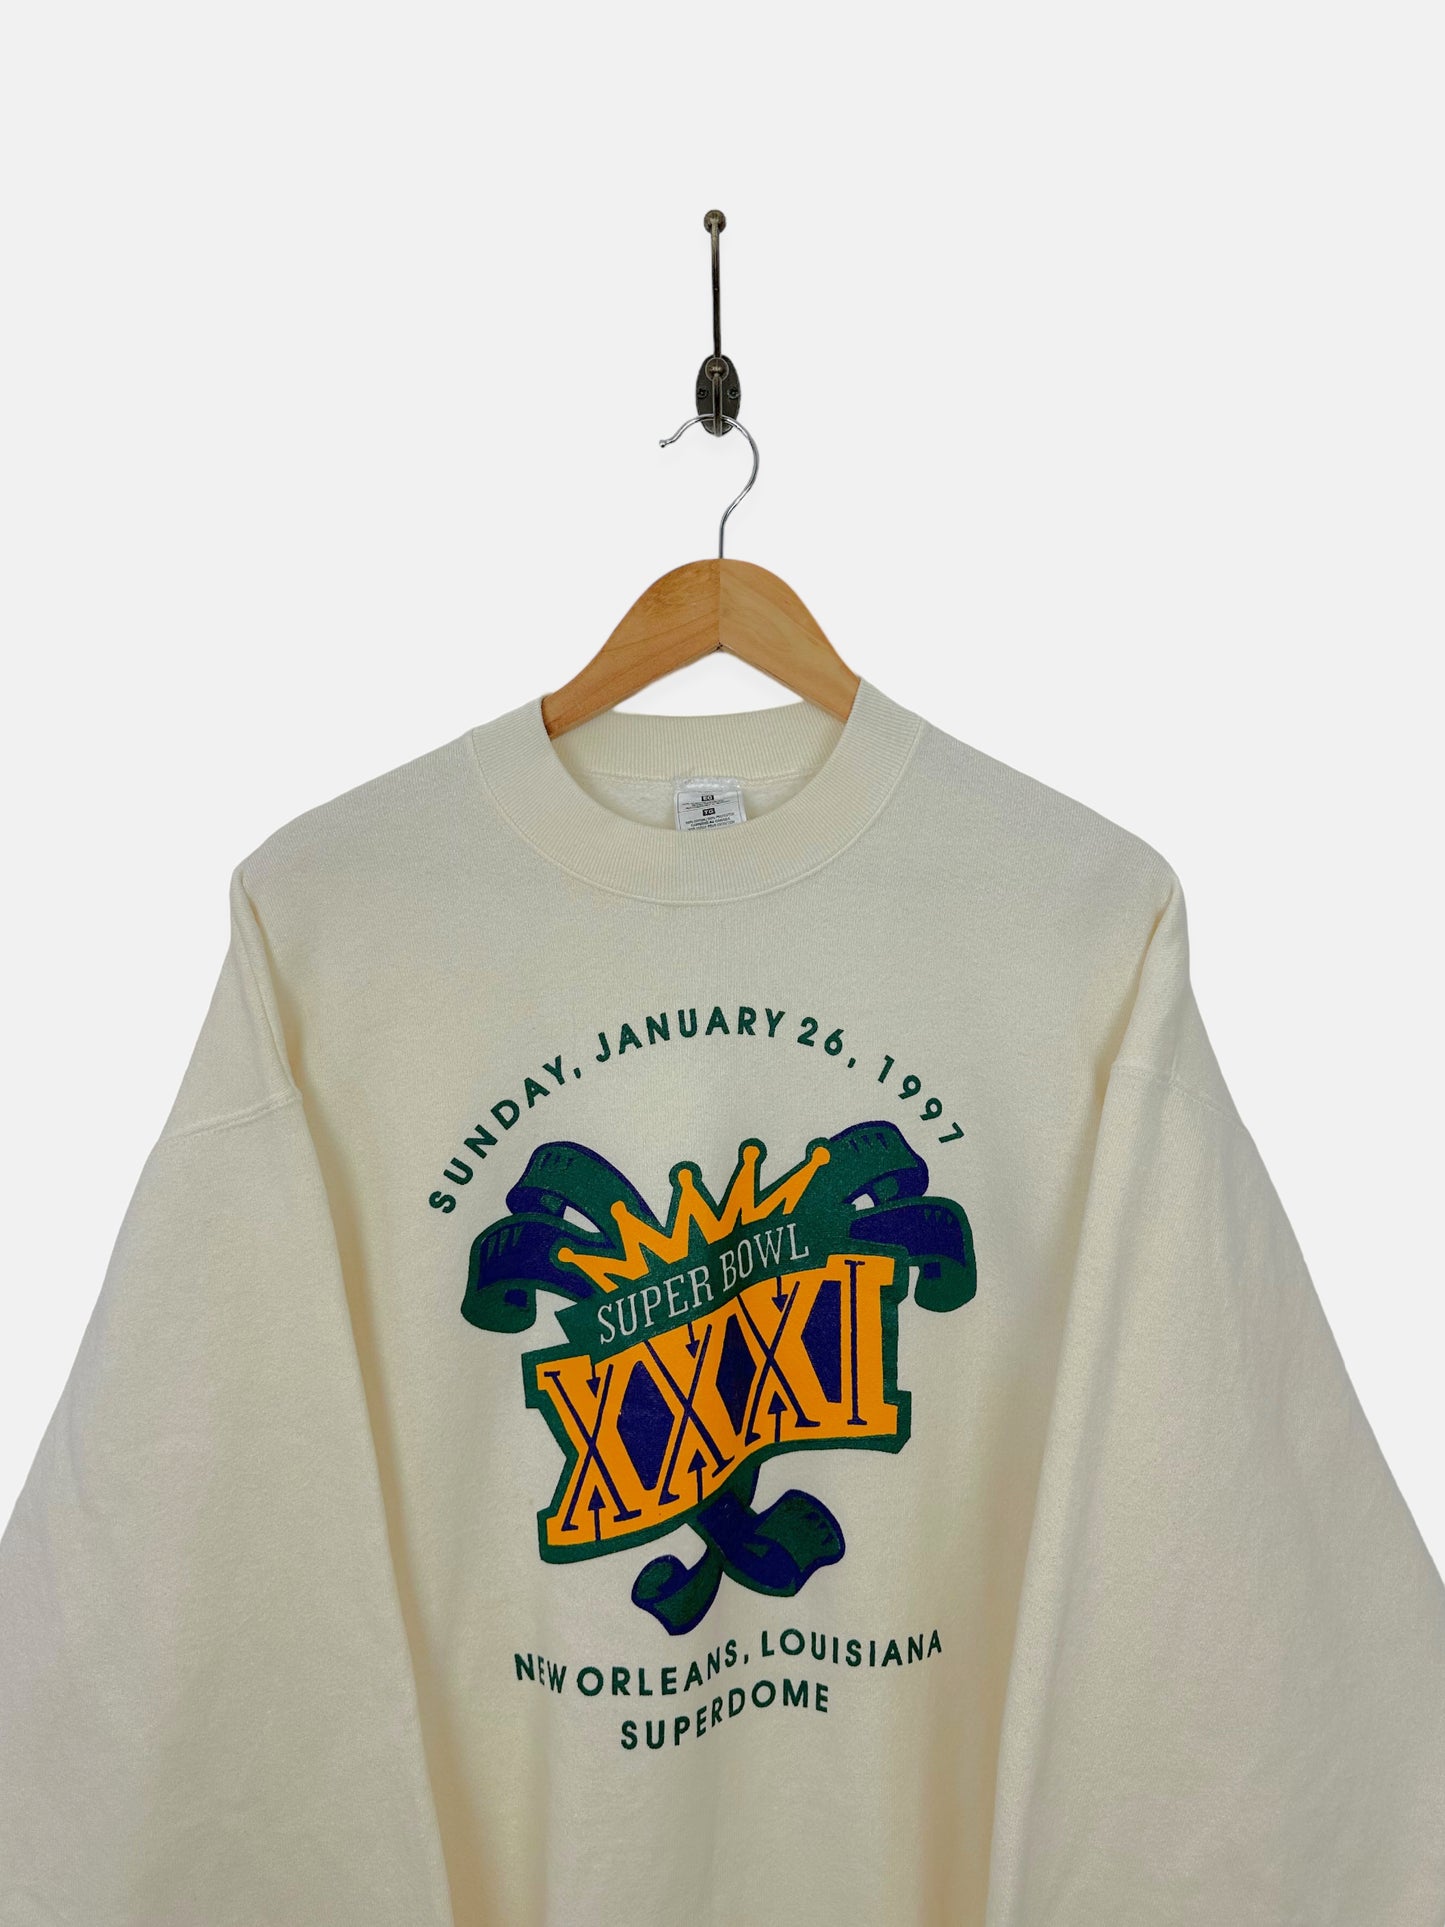 1997 NFL Superbowl XXXI Canada Made Vintage Sweatshirt Size XL